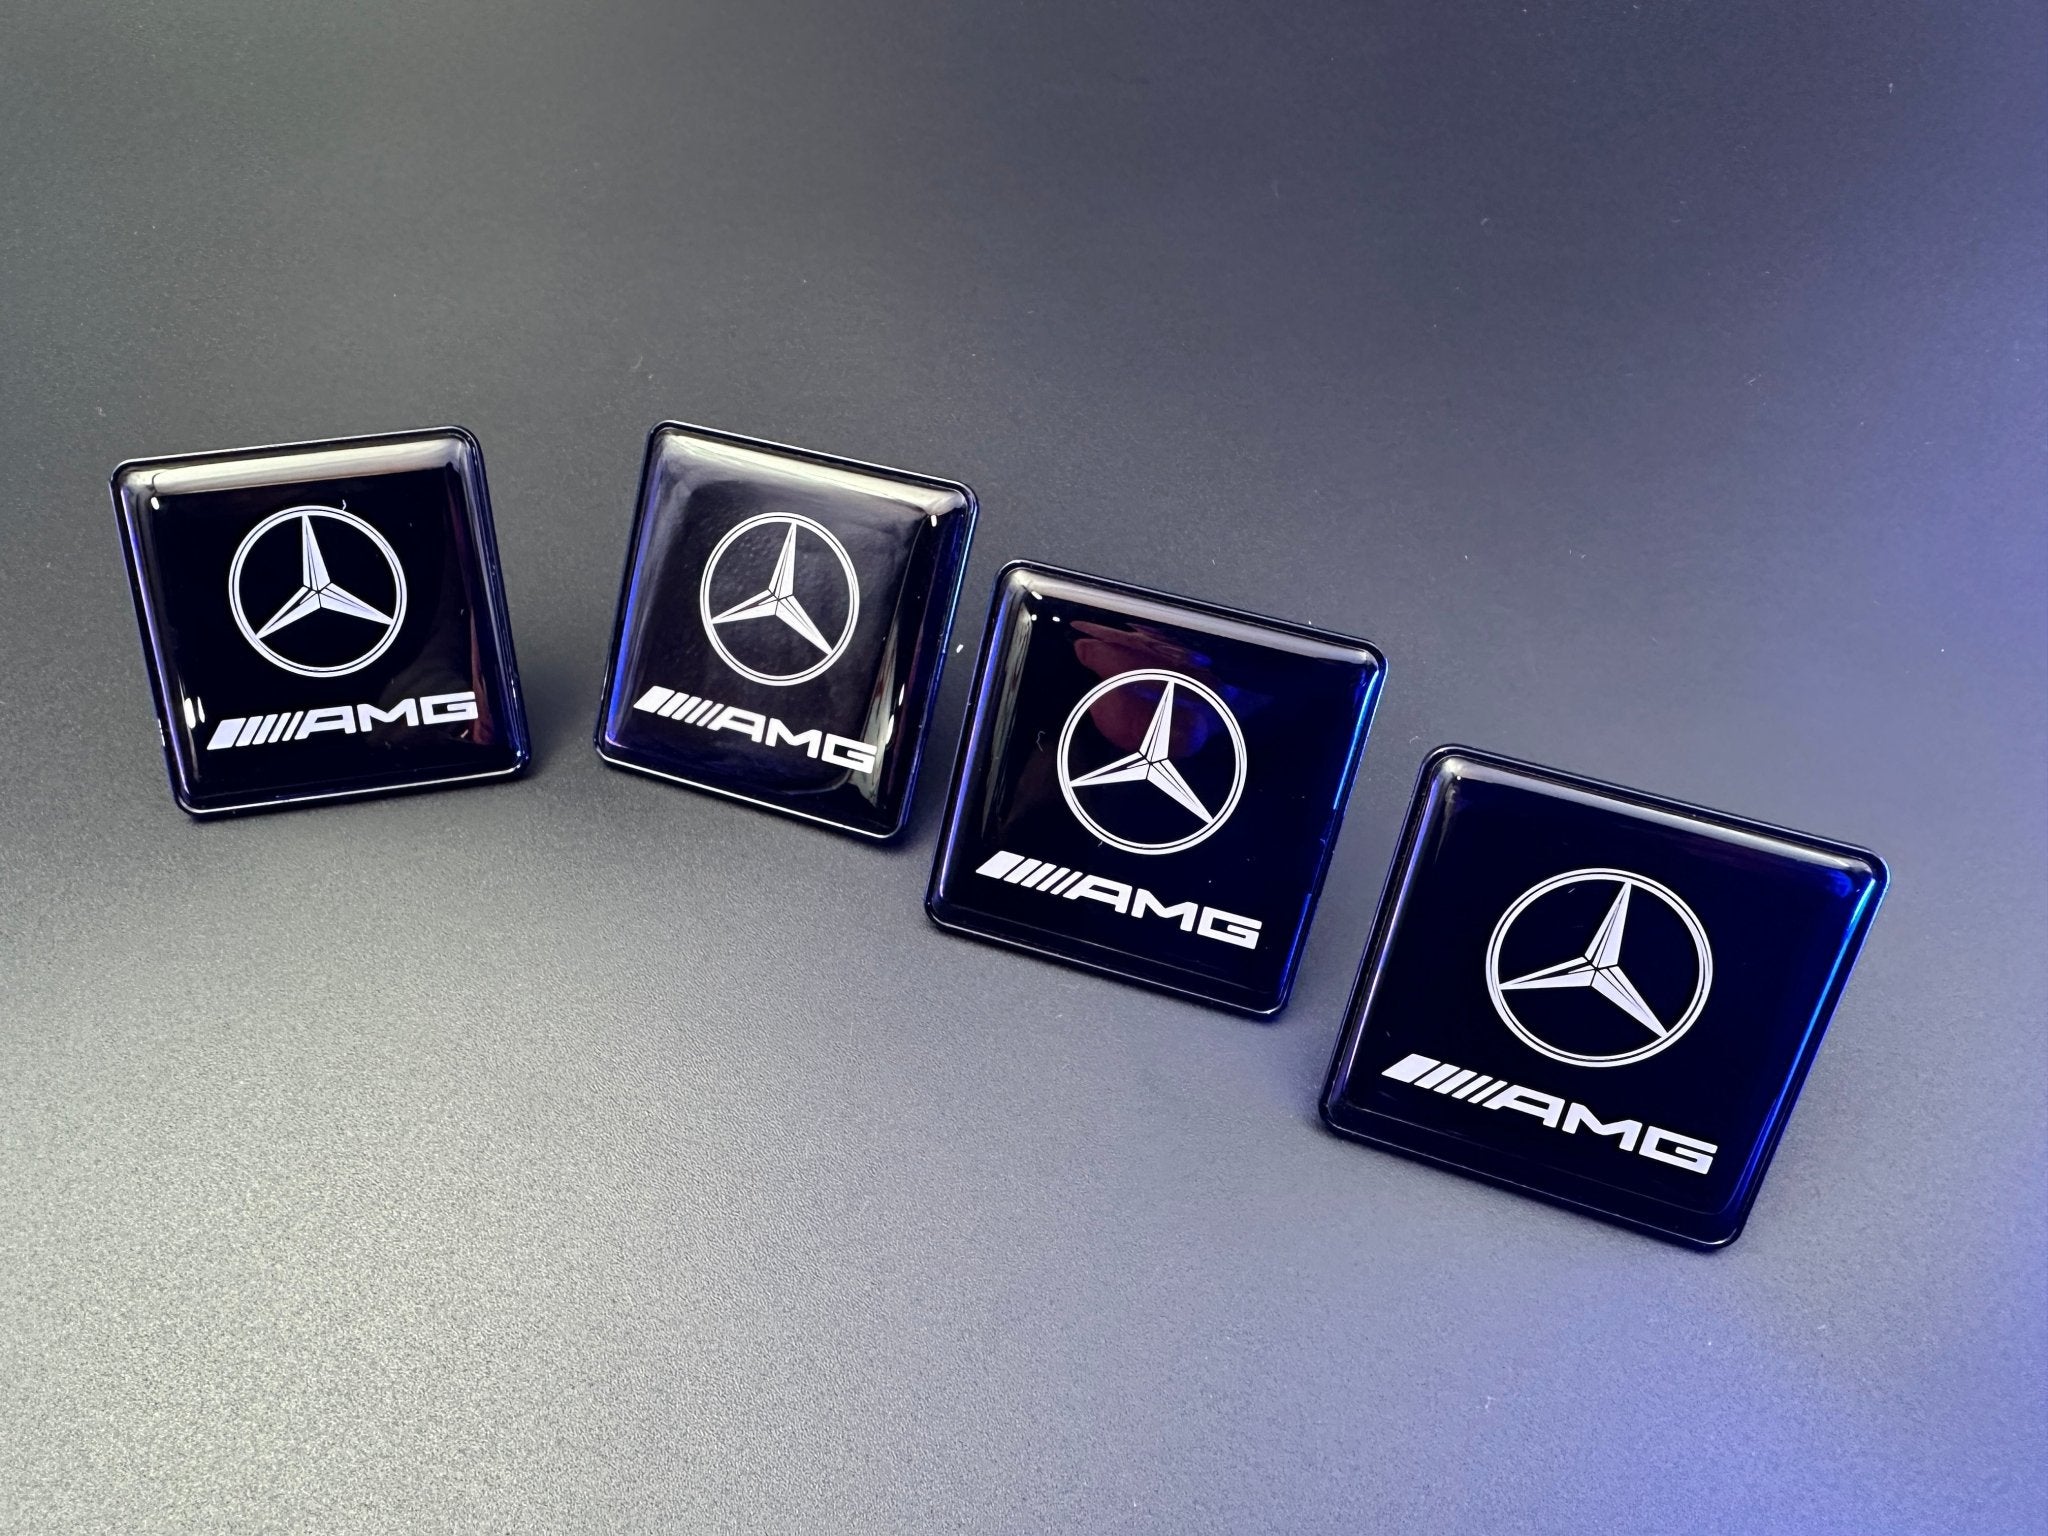 Seats Emblem set in black color with AMG Mercedes-Benz logo